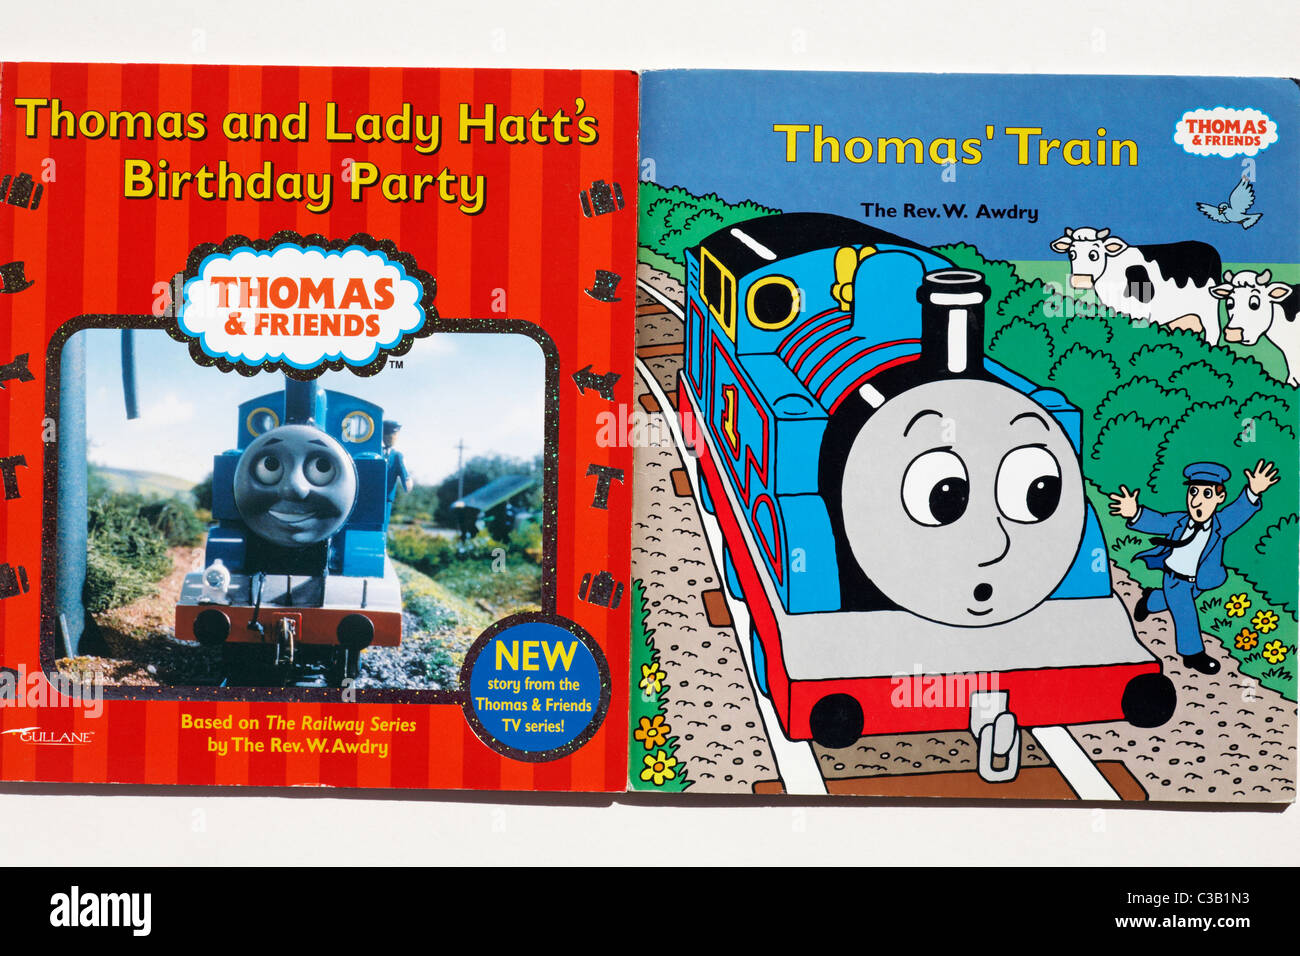 Two Thomas the tank engine books - Thomas' Train and Thomas and Lady Hatt's Birthday Party on white background Stock Photo